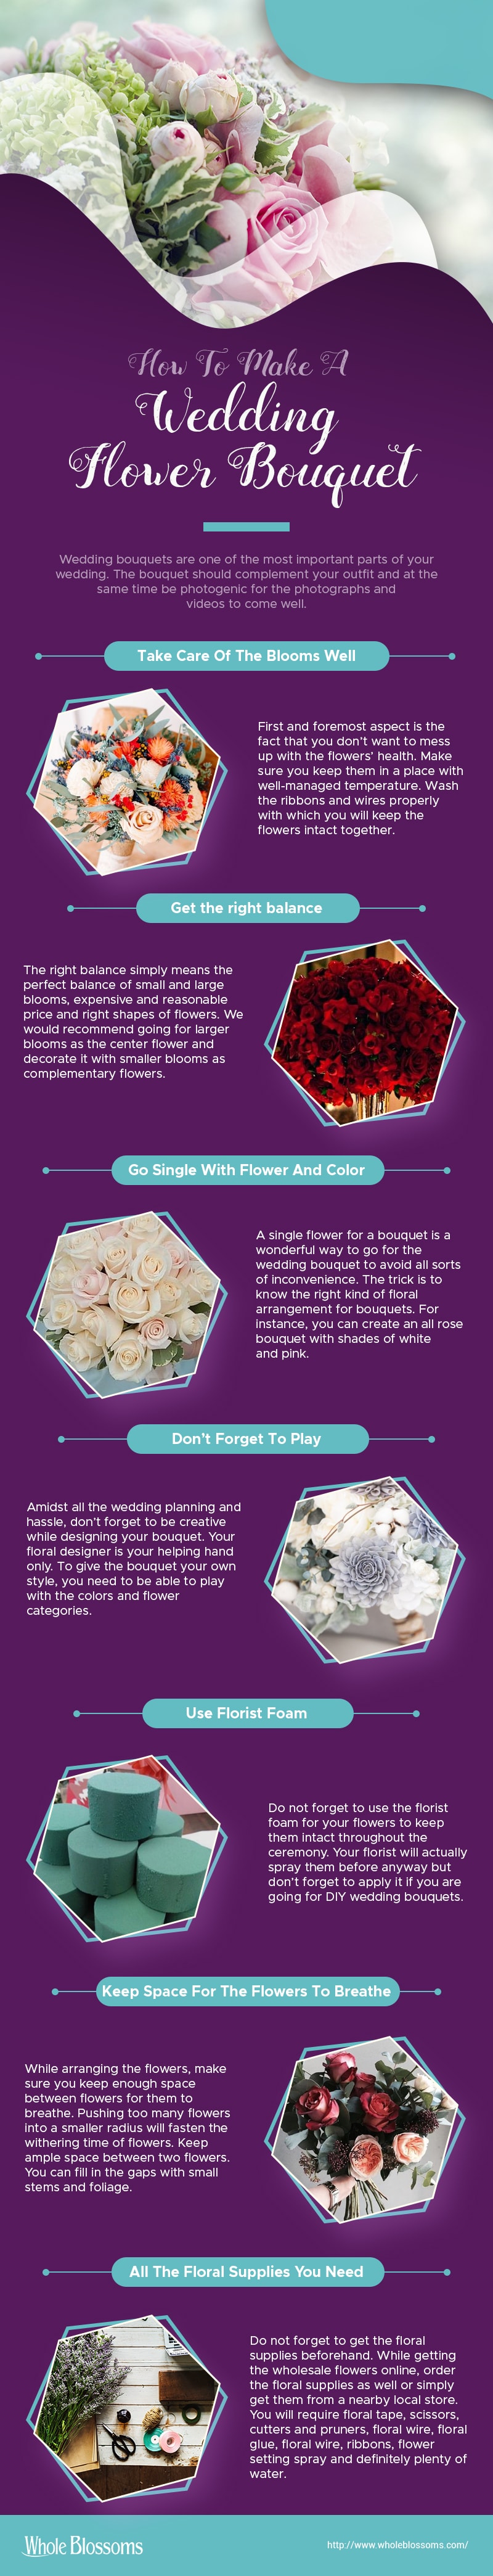 How to make a Wedding Flower Bouquet